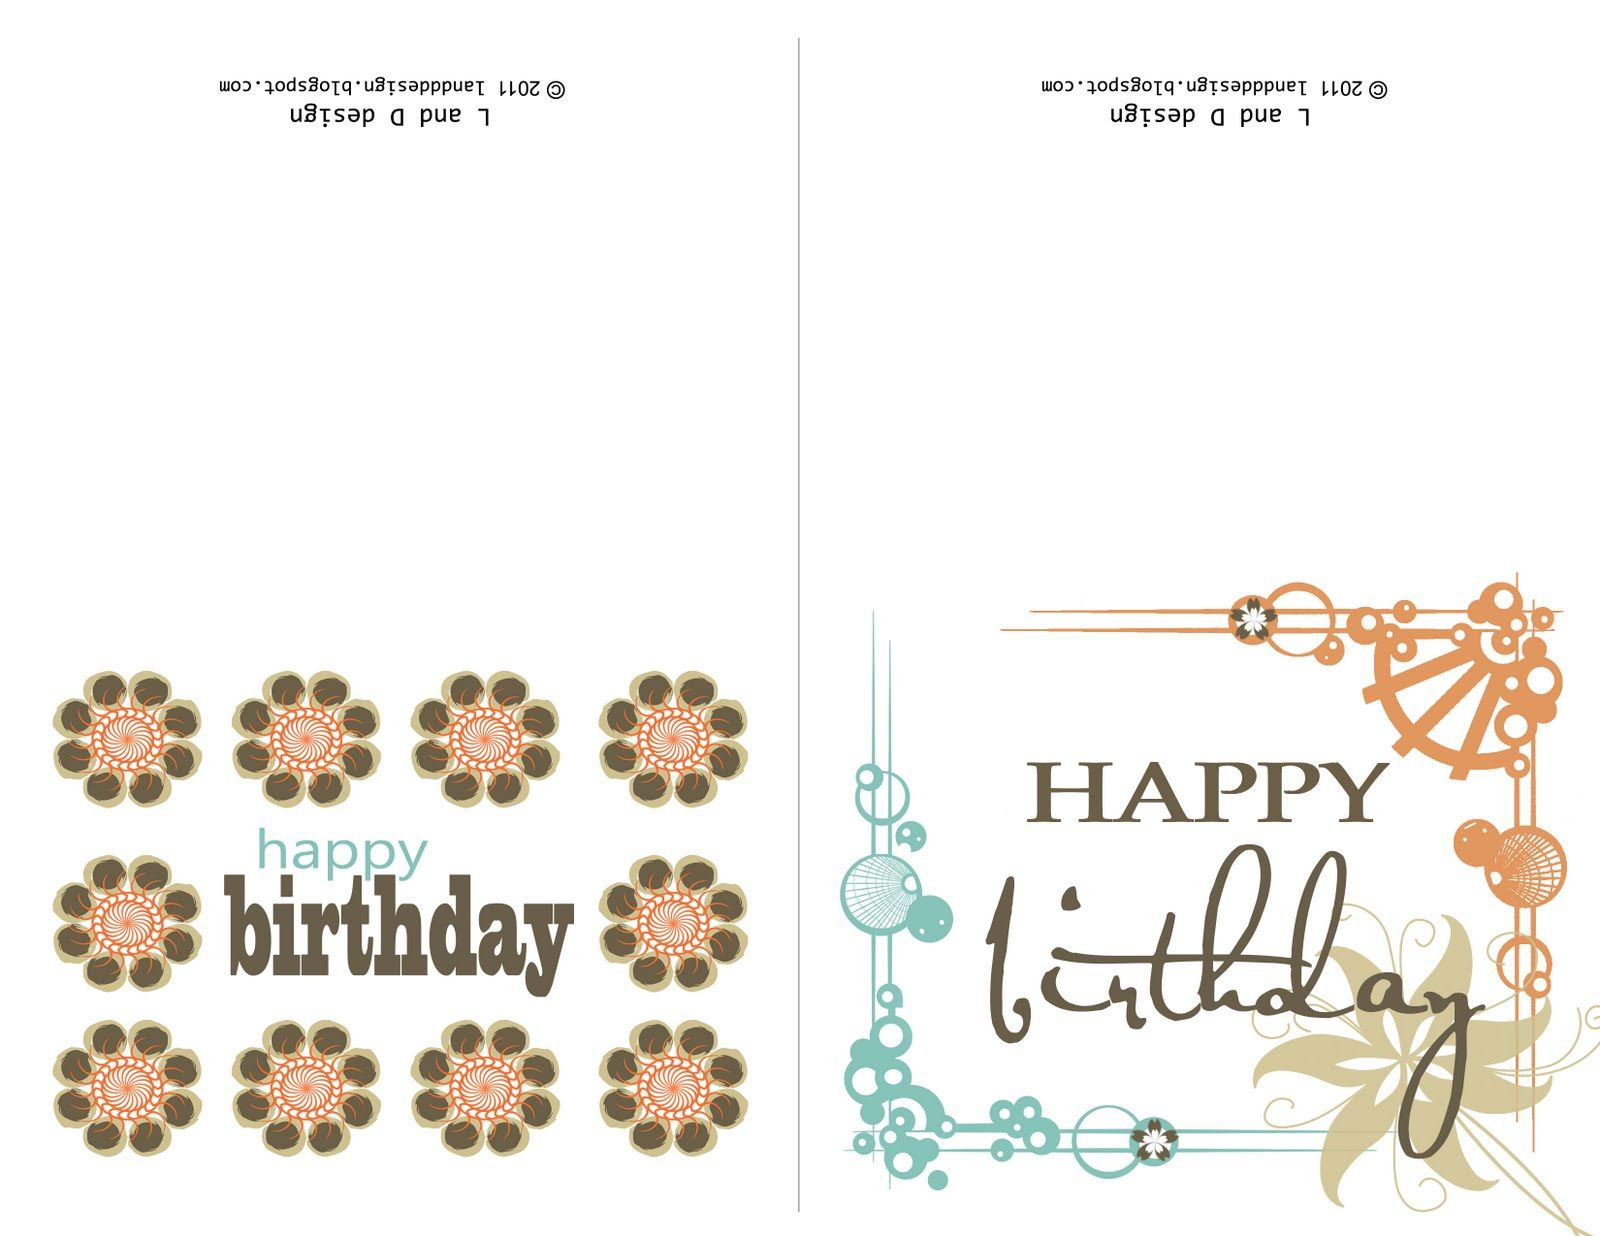 Printable Birthday Cards For Mom | Happy Birthday To You | Pinterest - Free Printable Birthday Cards For Mom